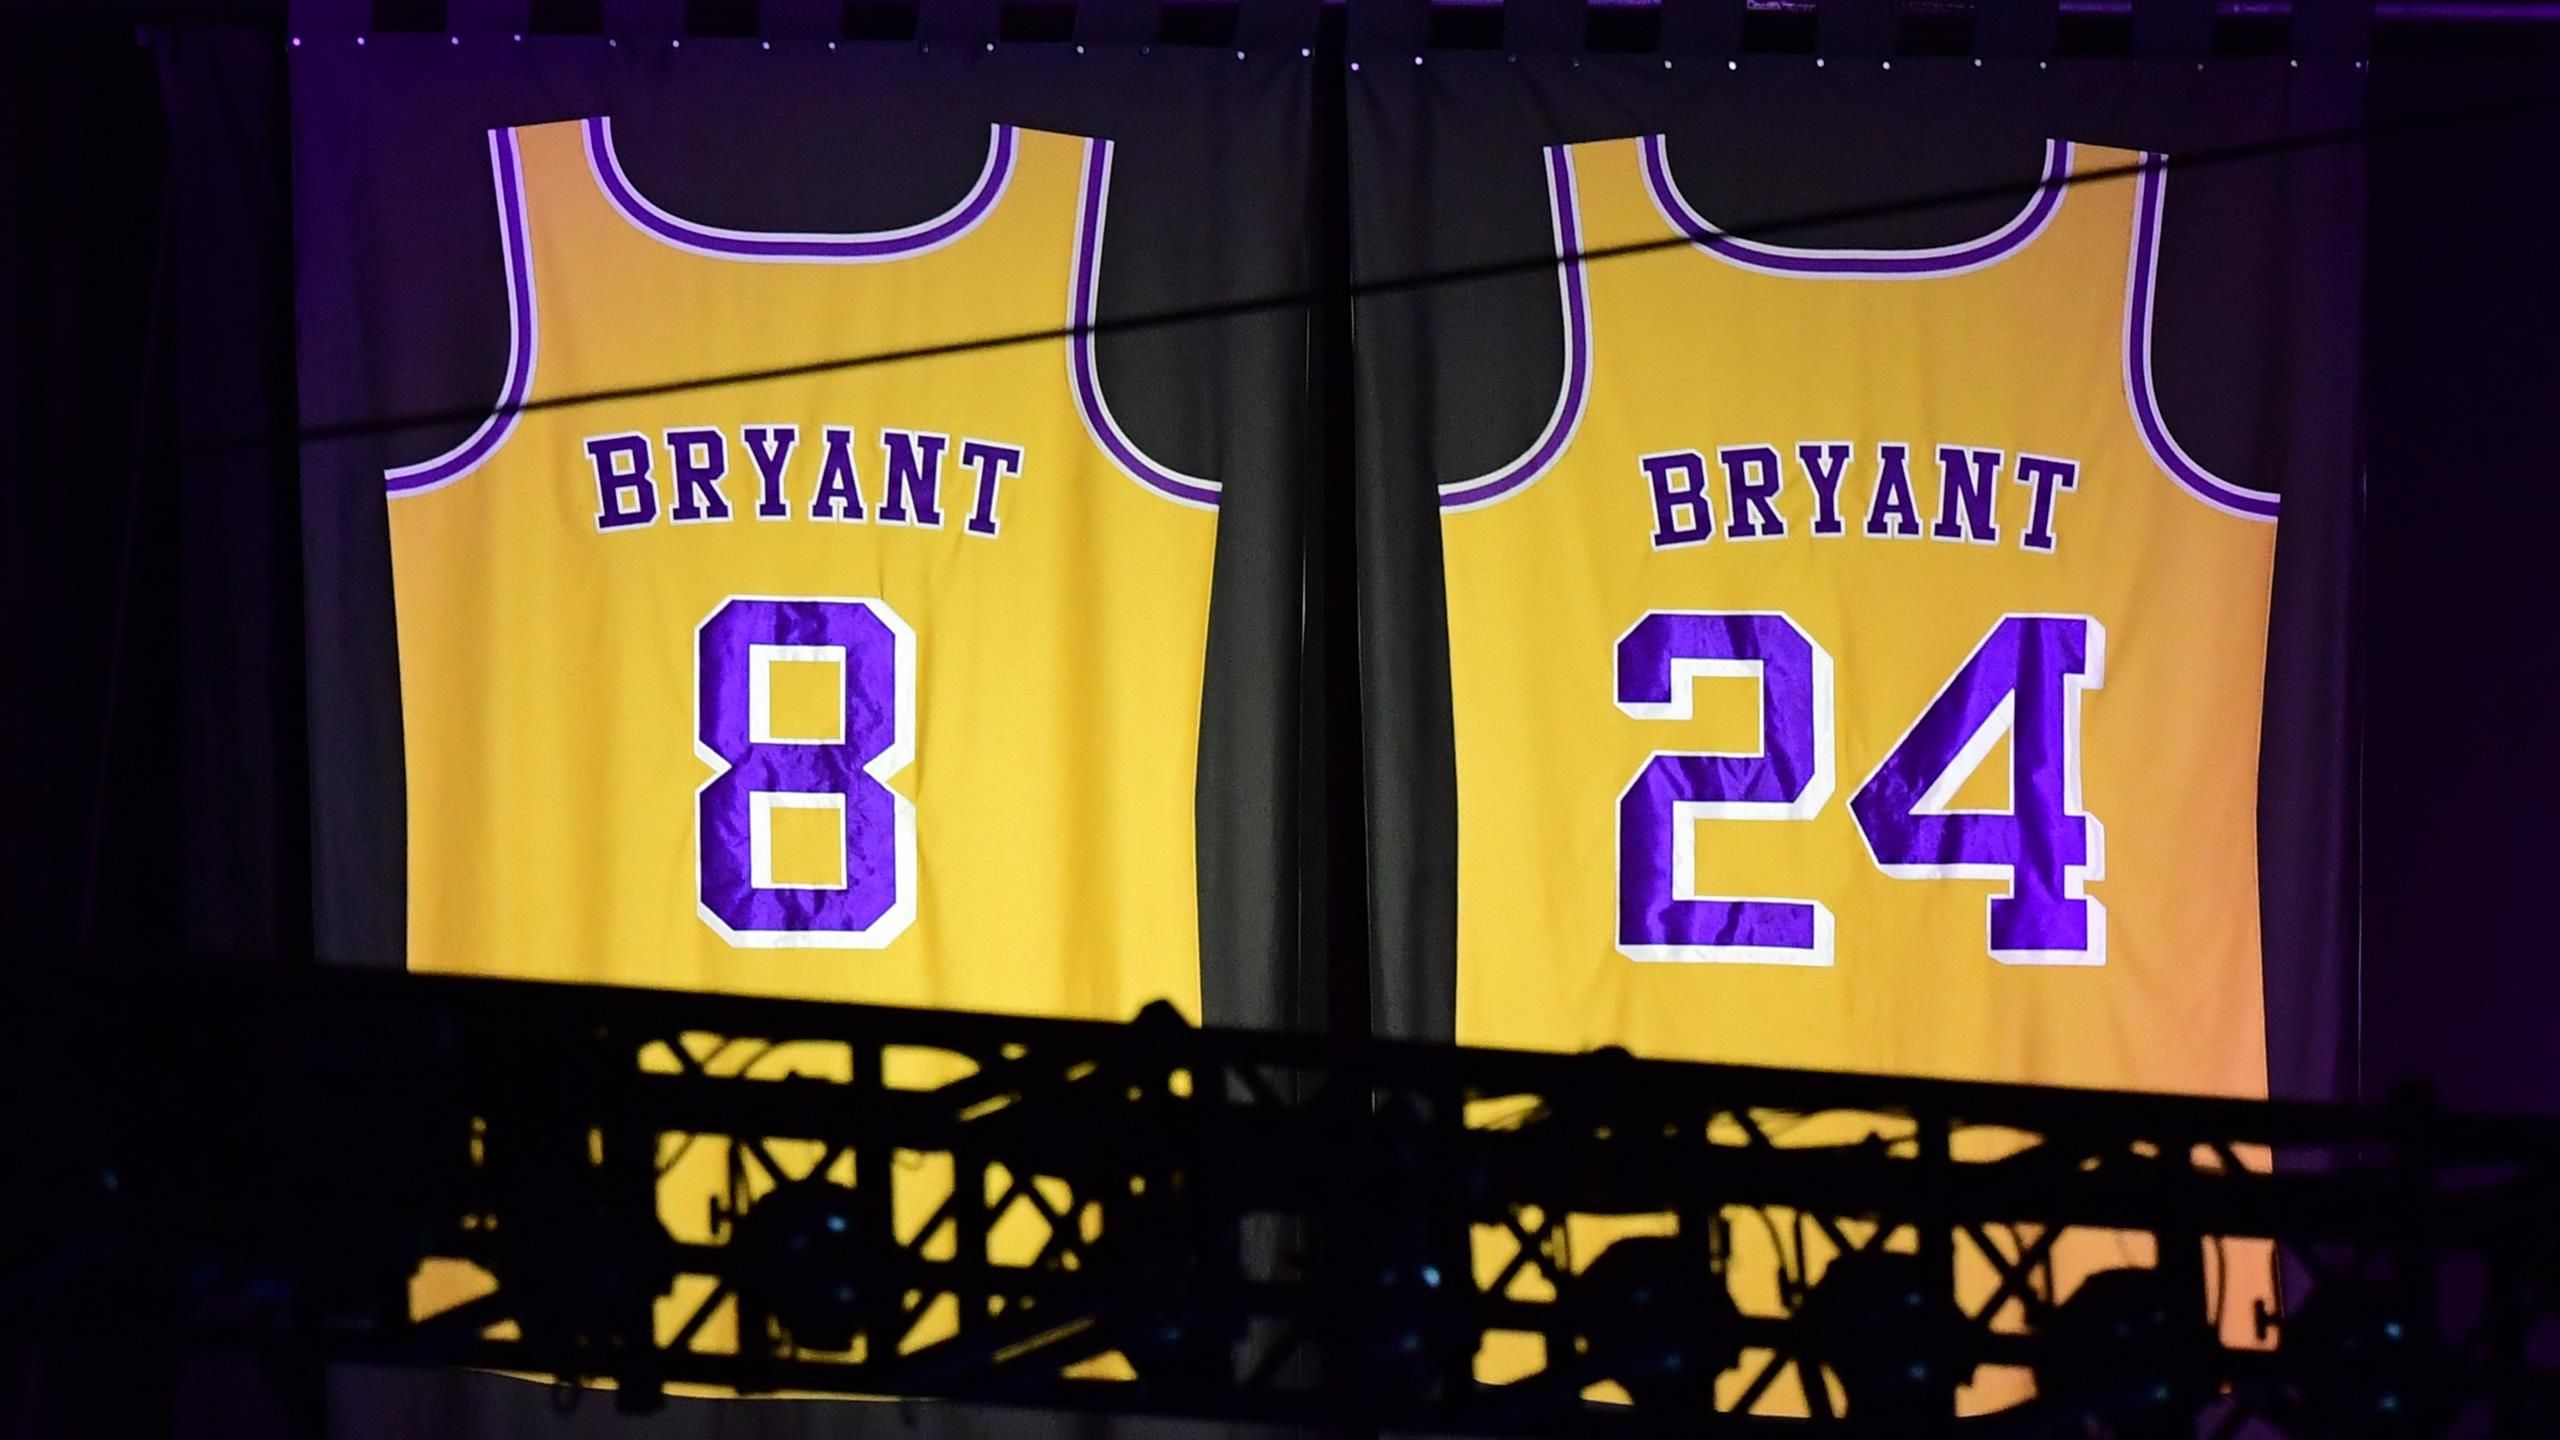 Kobe Bryant's Best Games in Jerseys 8 & 24